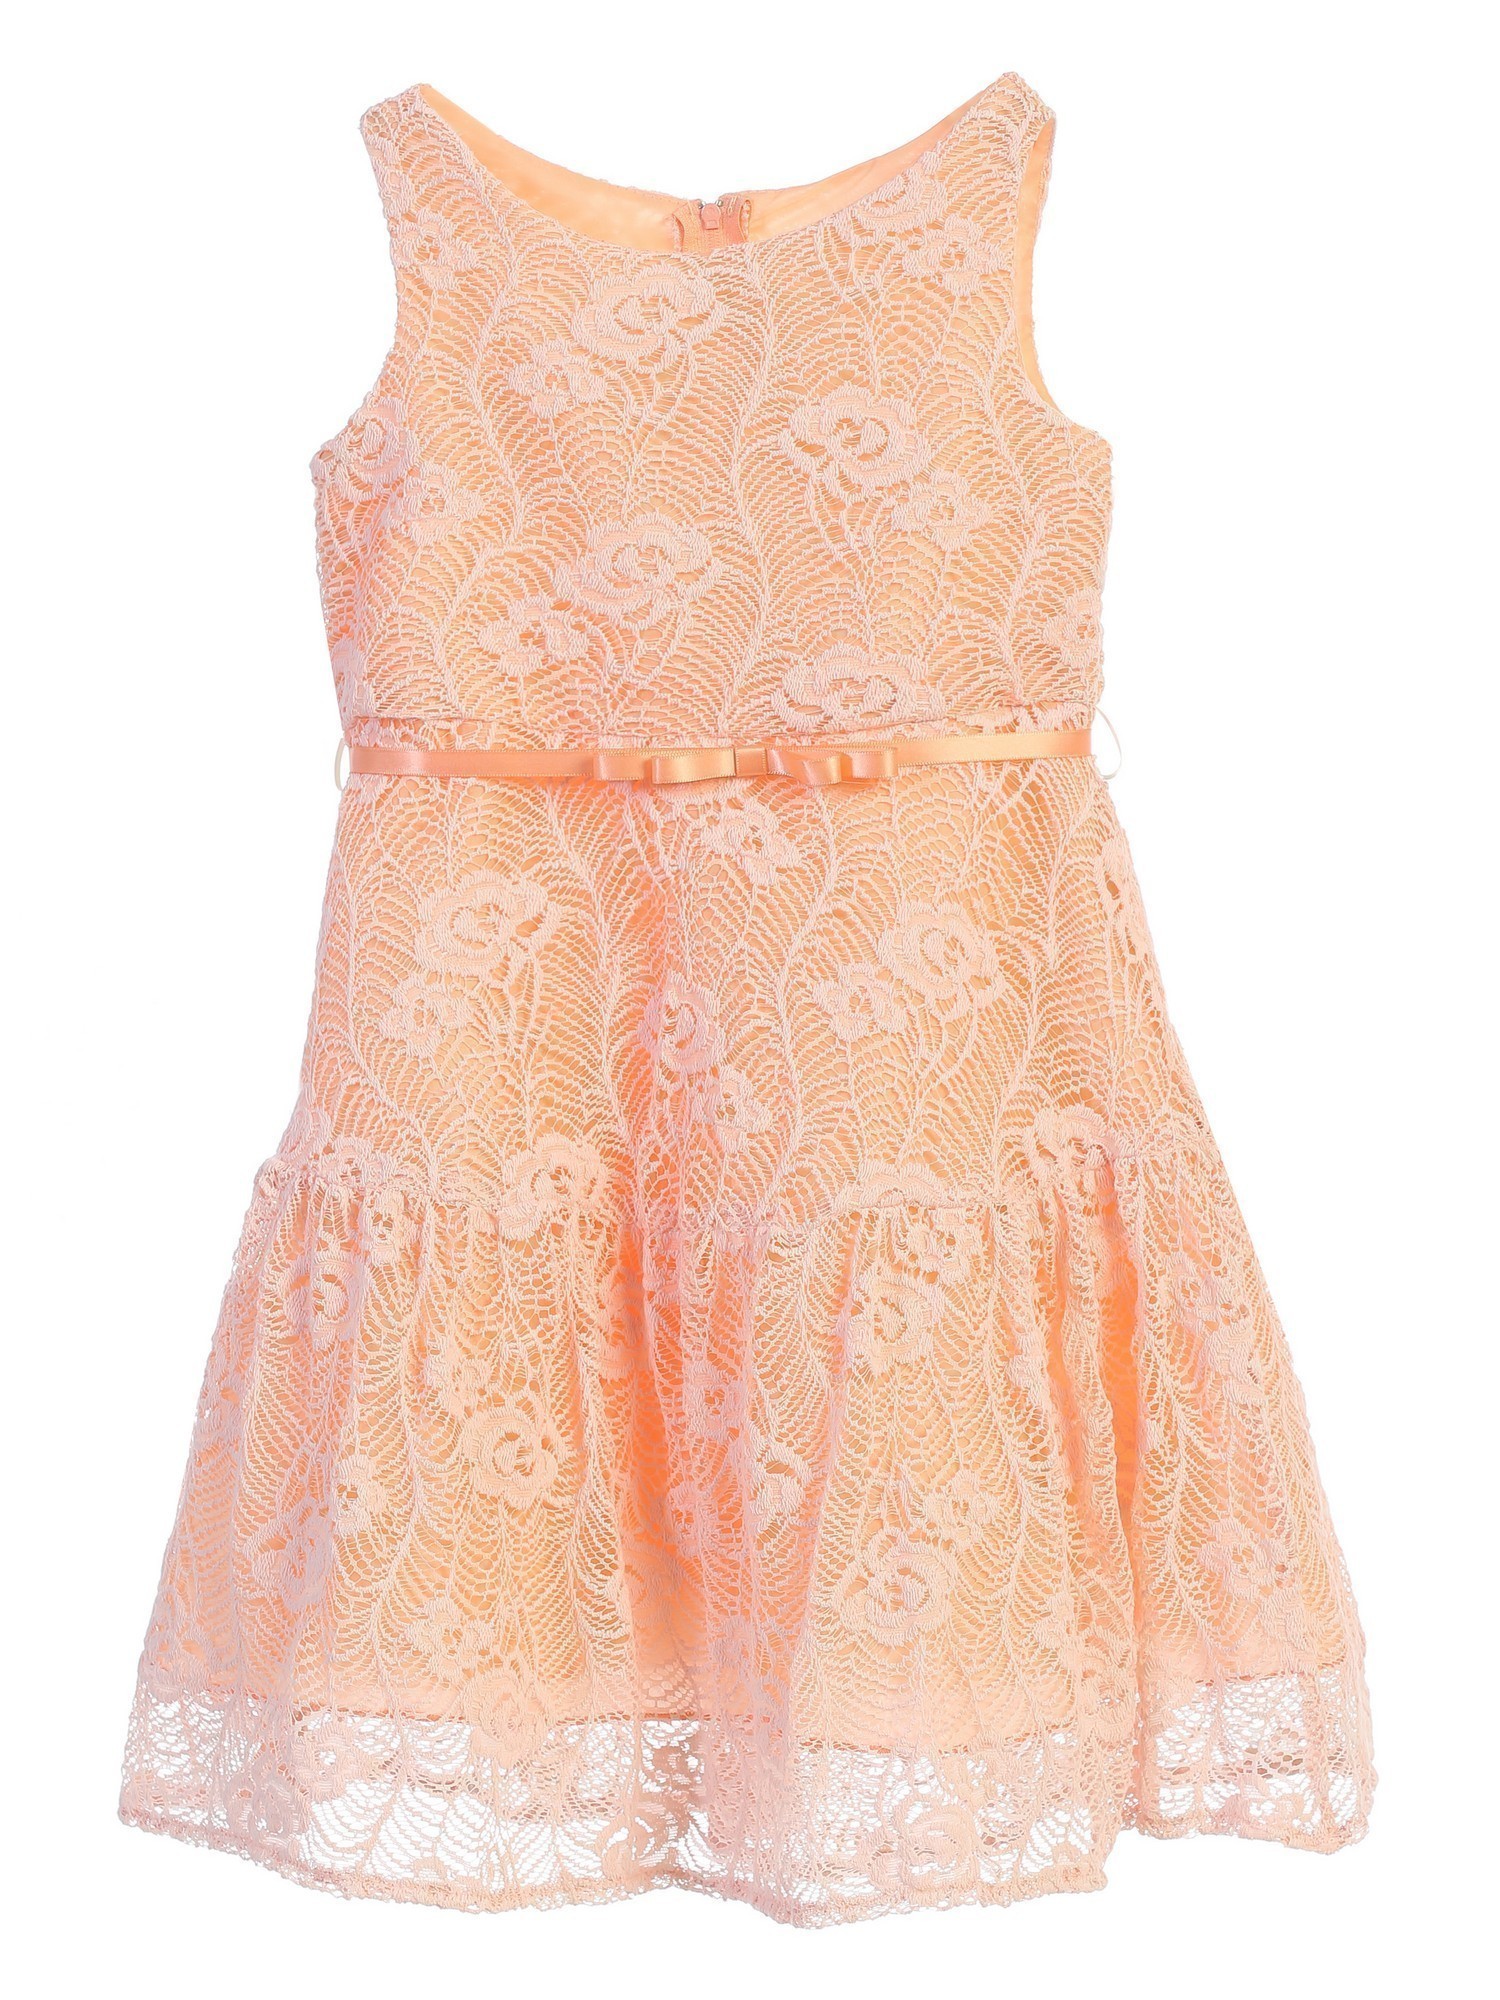 peach color flower girl dresses